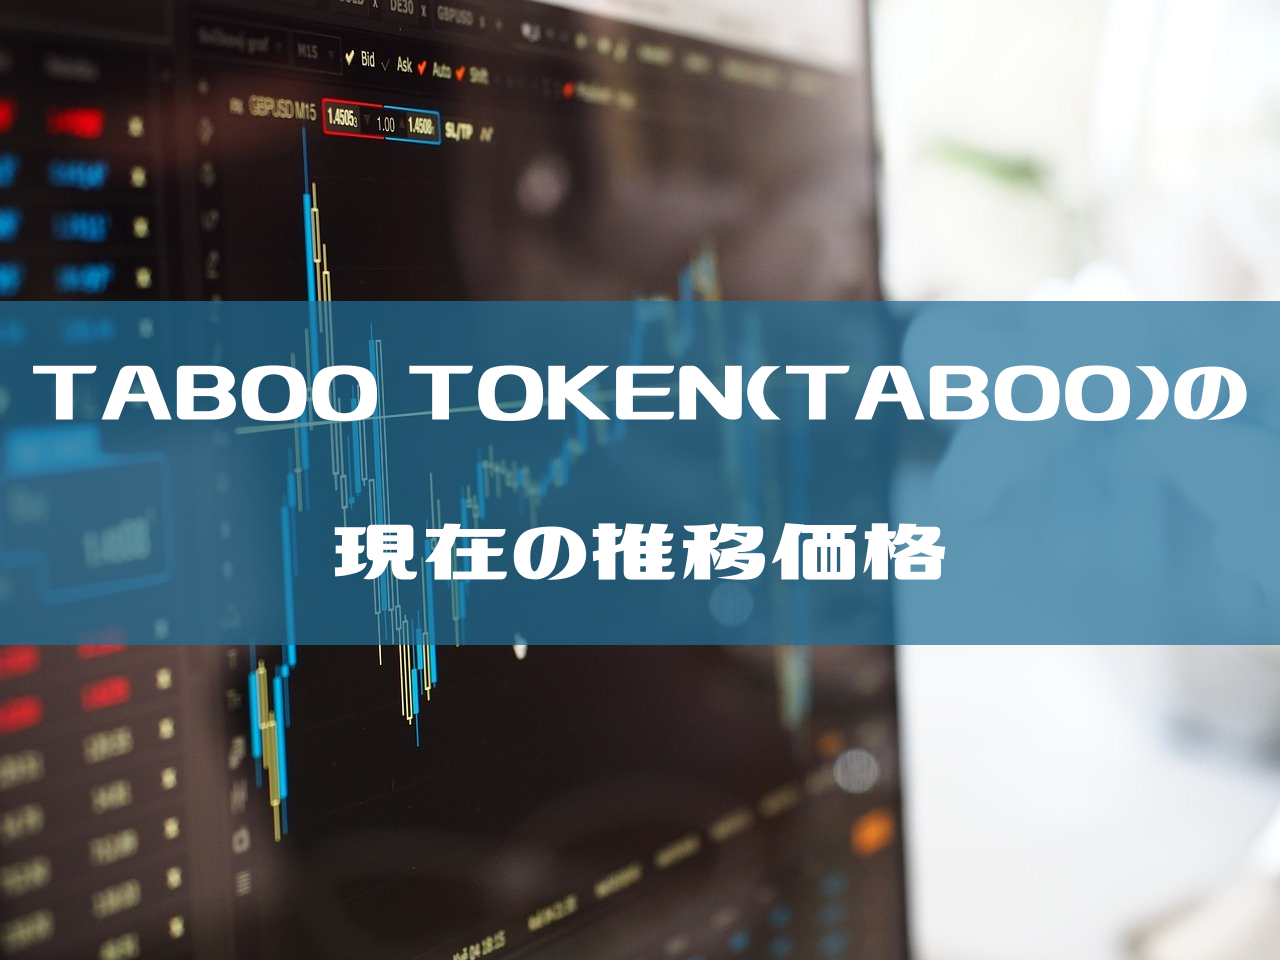 TABOO TOKEN(TABOO)の現在の推移価格のイメージ画像